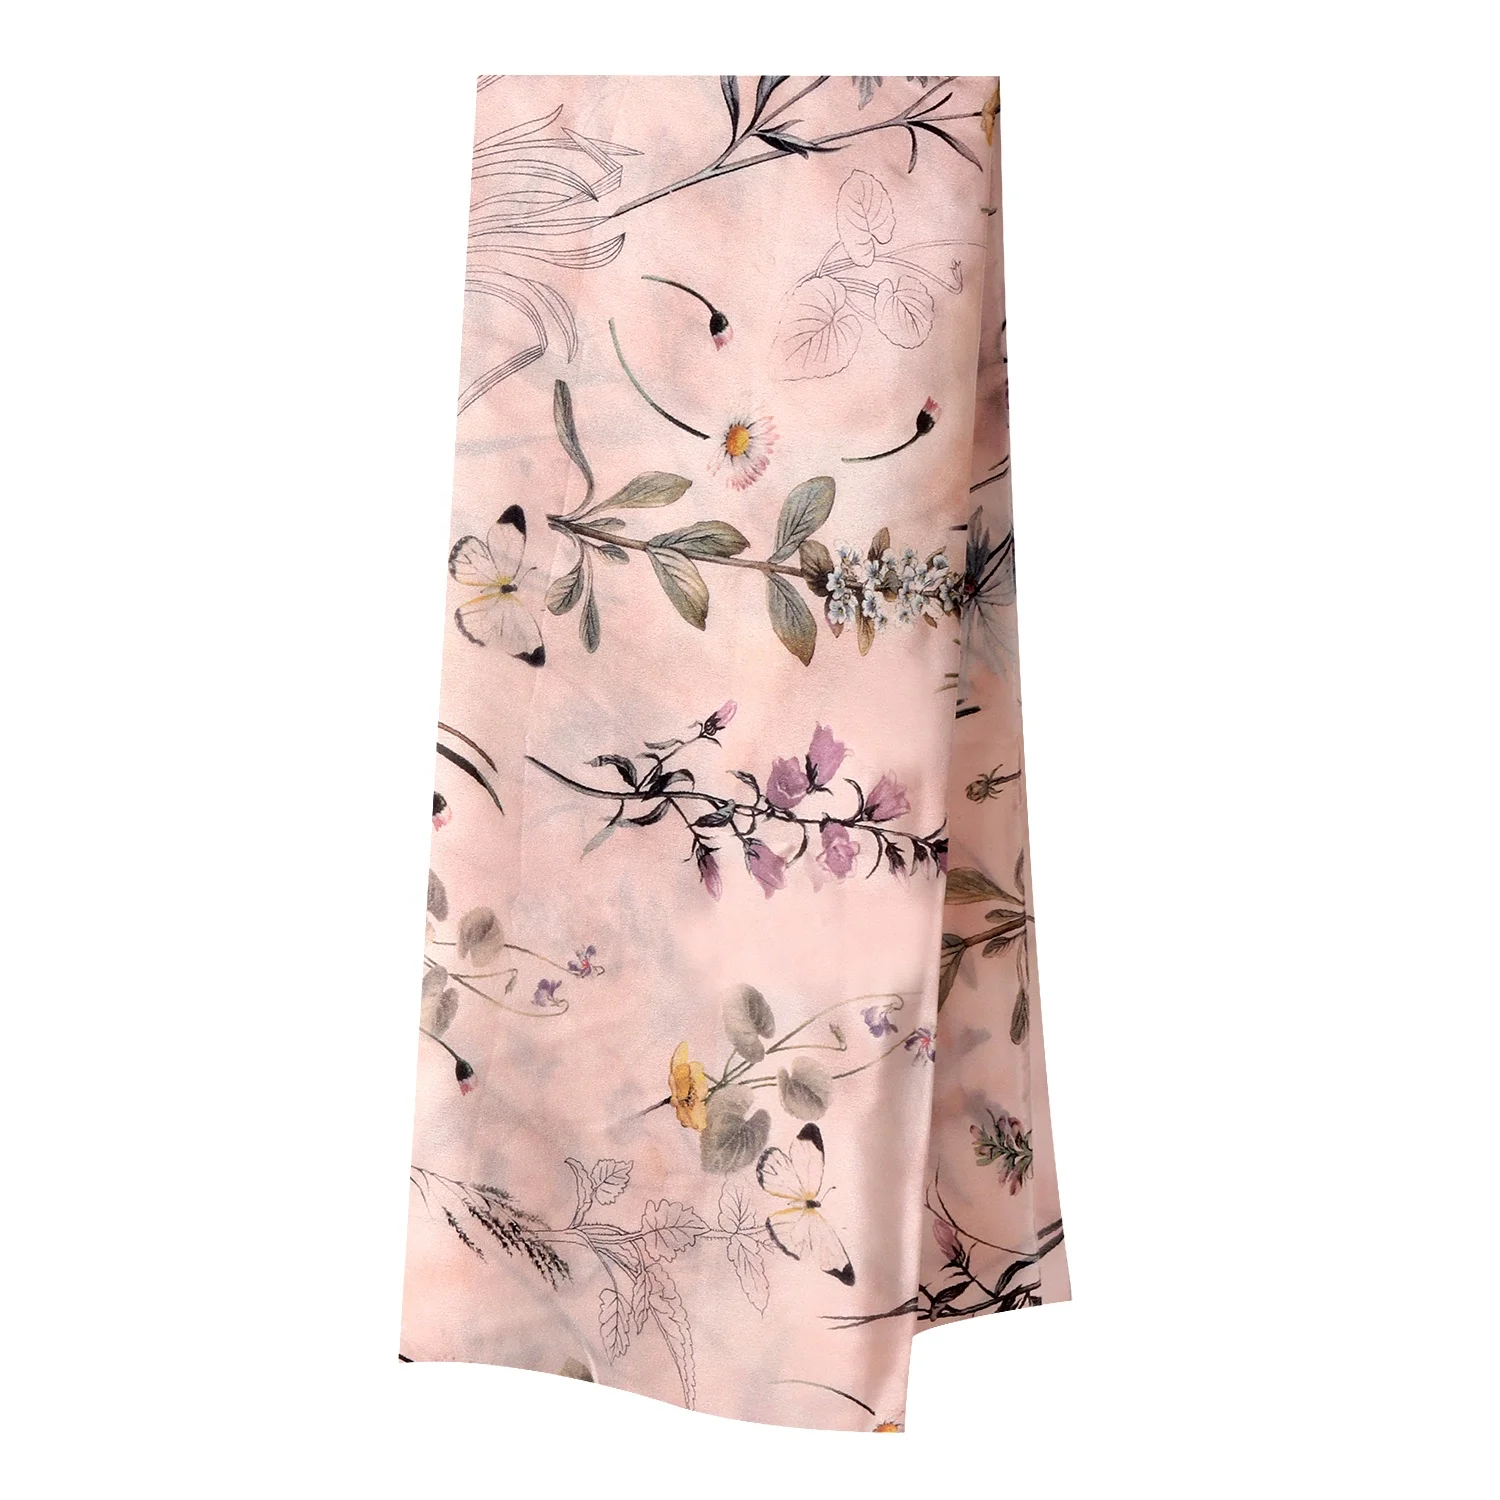 Hot sale digital print silk fabric 100% pure silk crepe de chine romantic style for girl's tops dressing